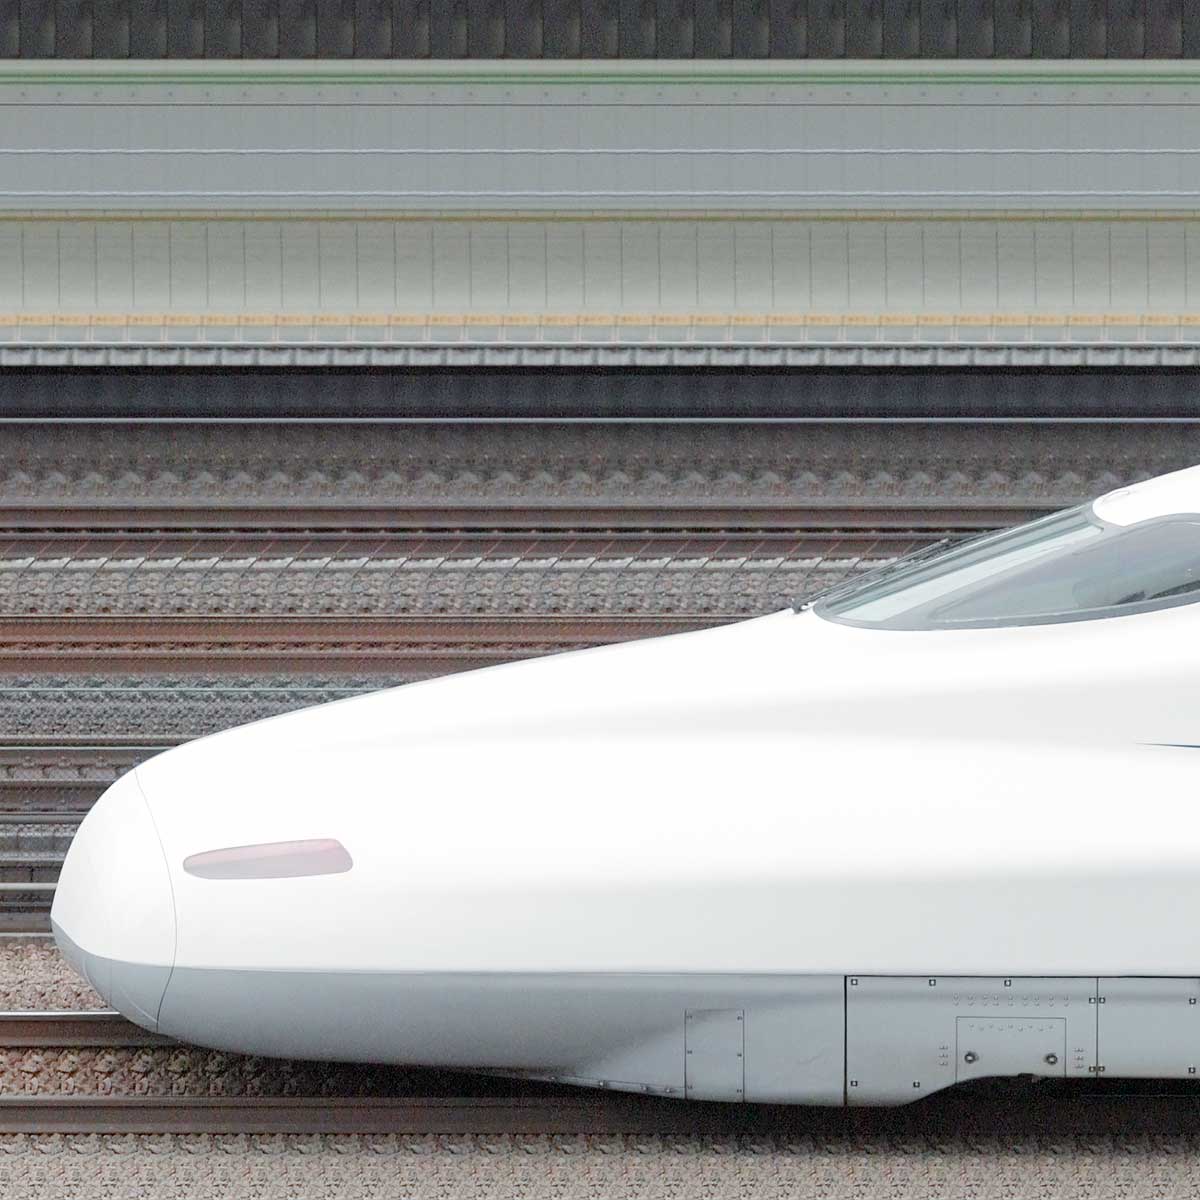 Jr西日本n700系新幹線電車 Railfile Jp 鉄道車両サイドビューの図鑑